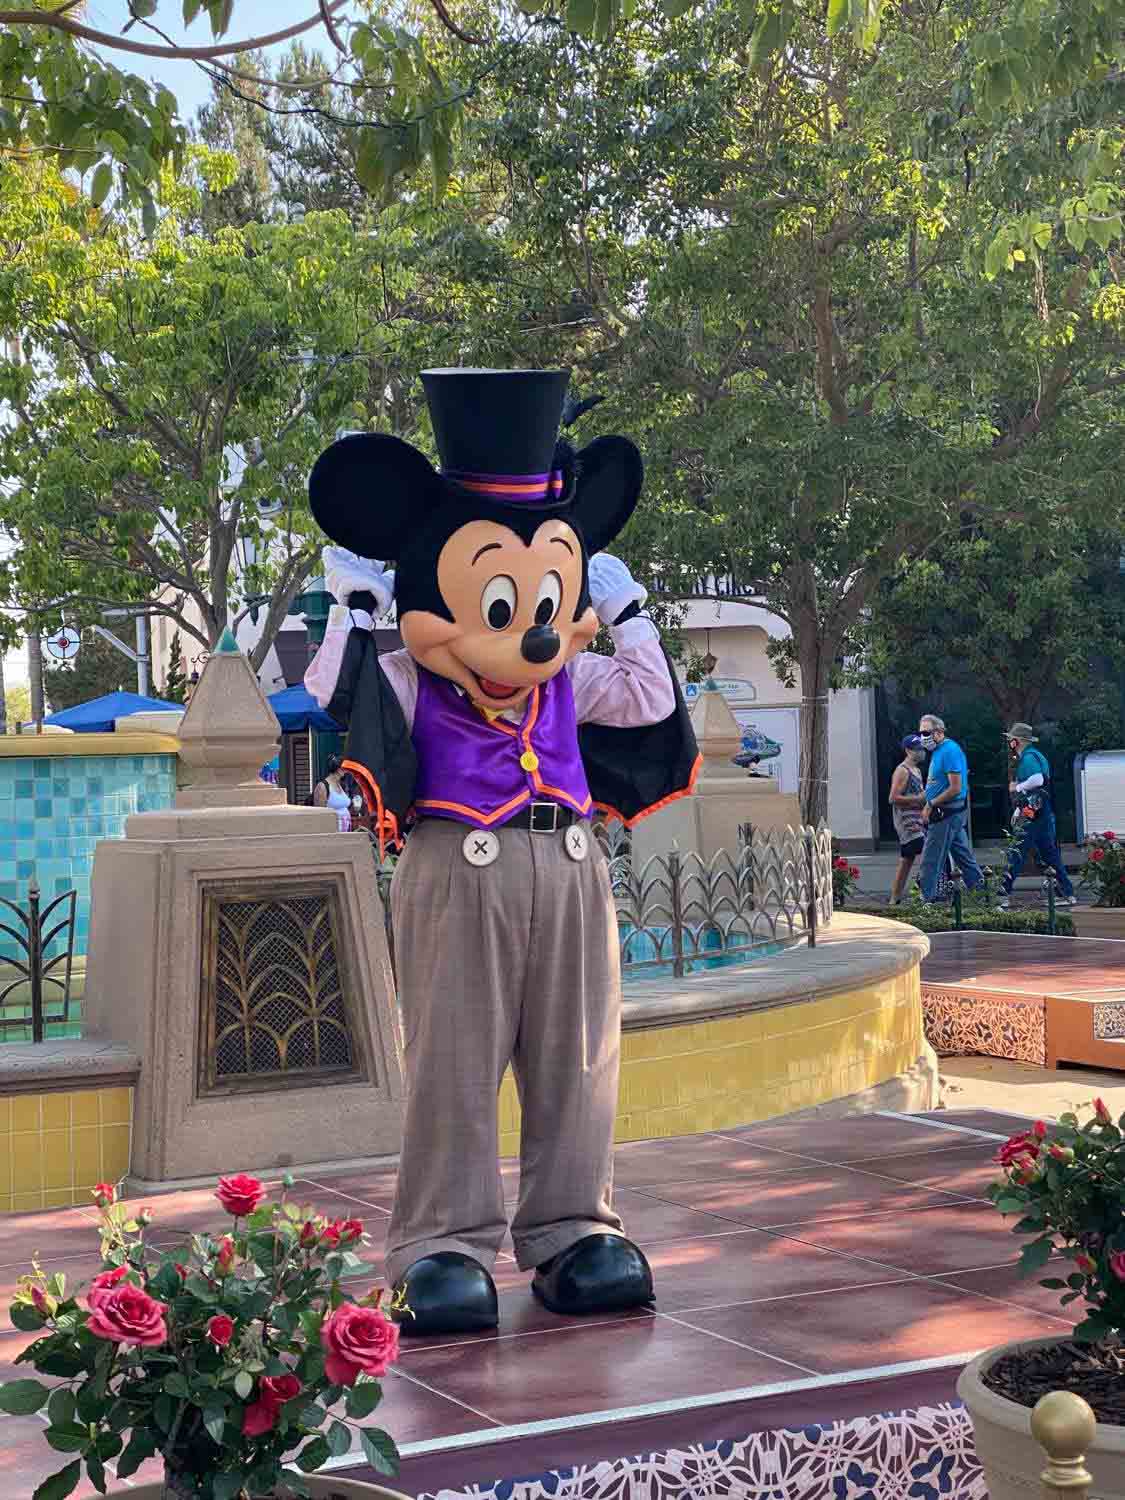 Mickey in Halloween costume